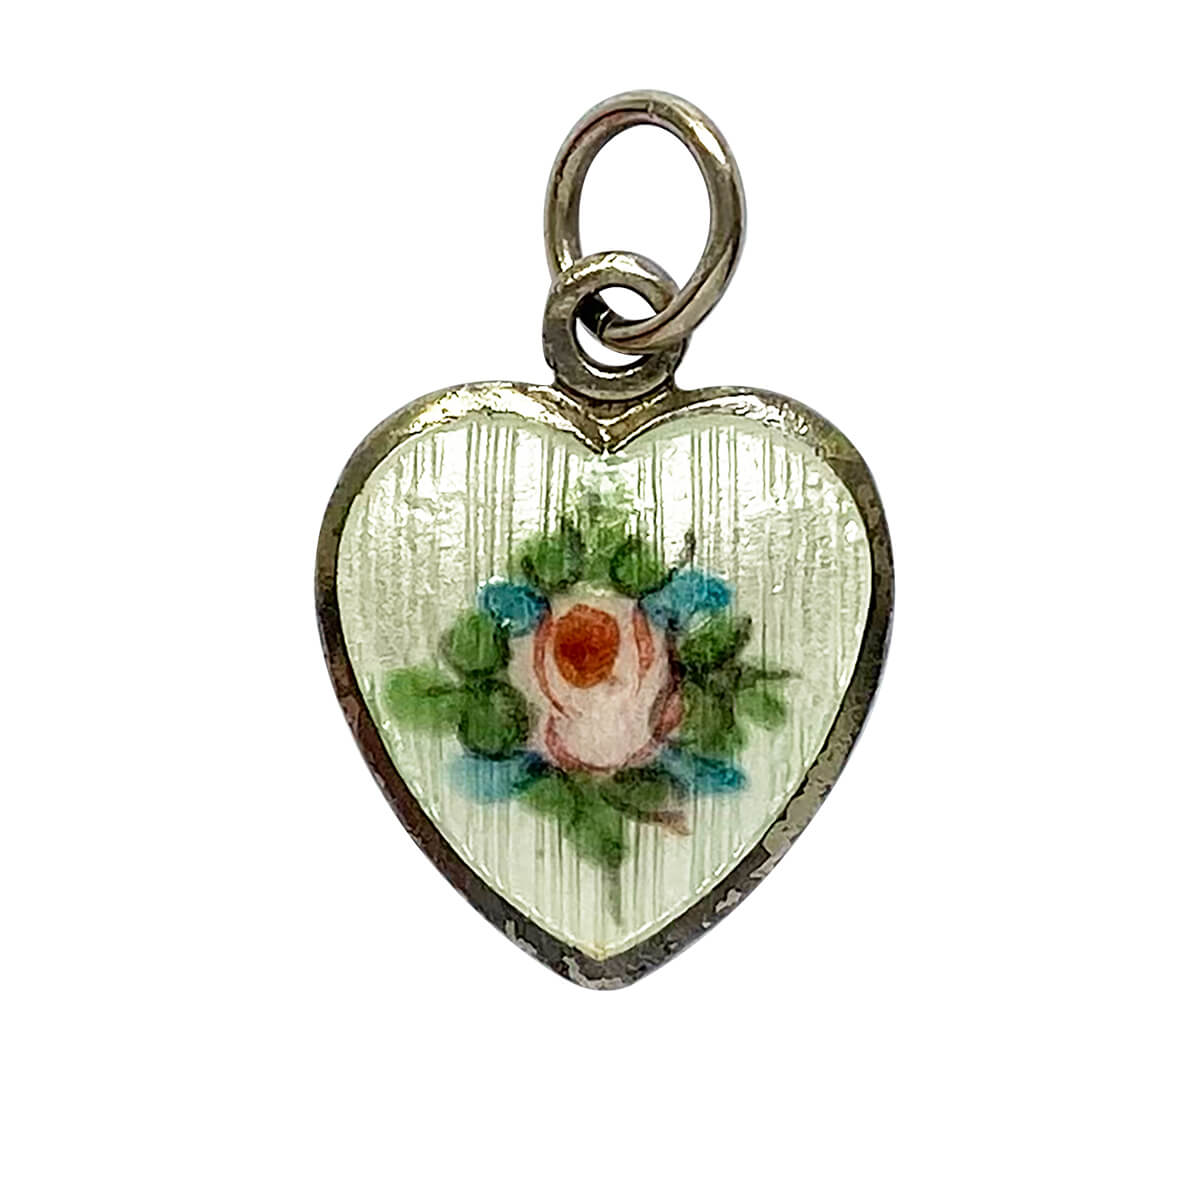 Vintage heart charm guilloche enamel rose flower sterling silver pendant from Charmarama